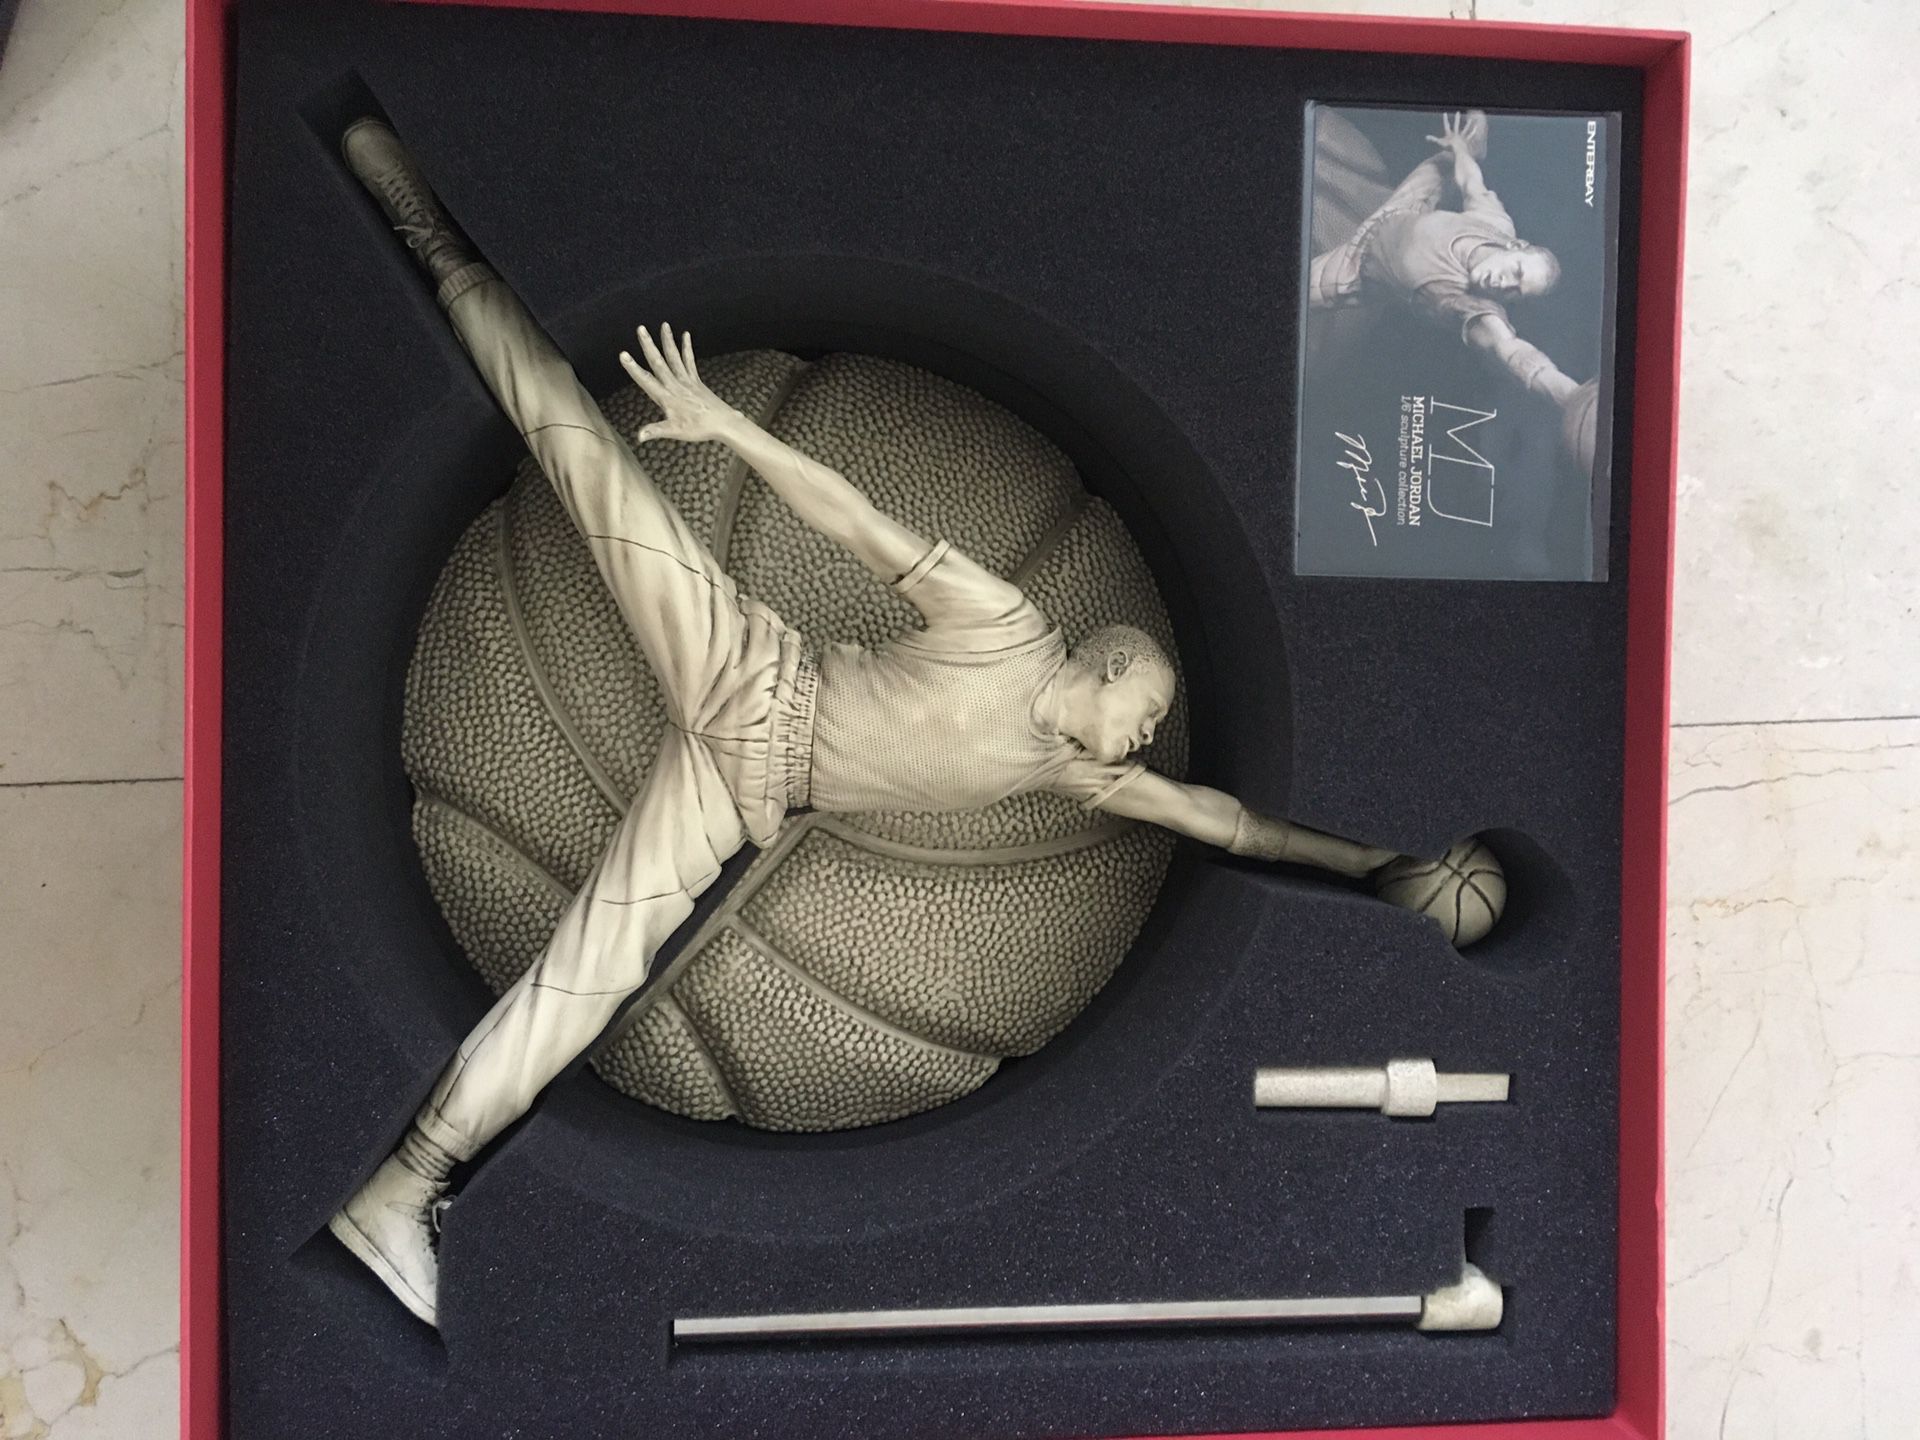 Michael Jordan sculpture By Enterbay 300pc worldwide